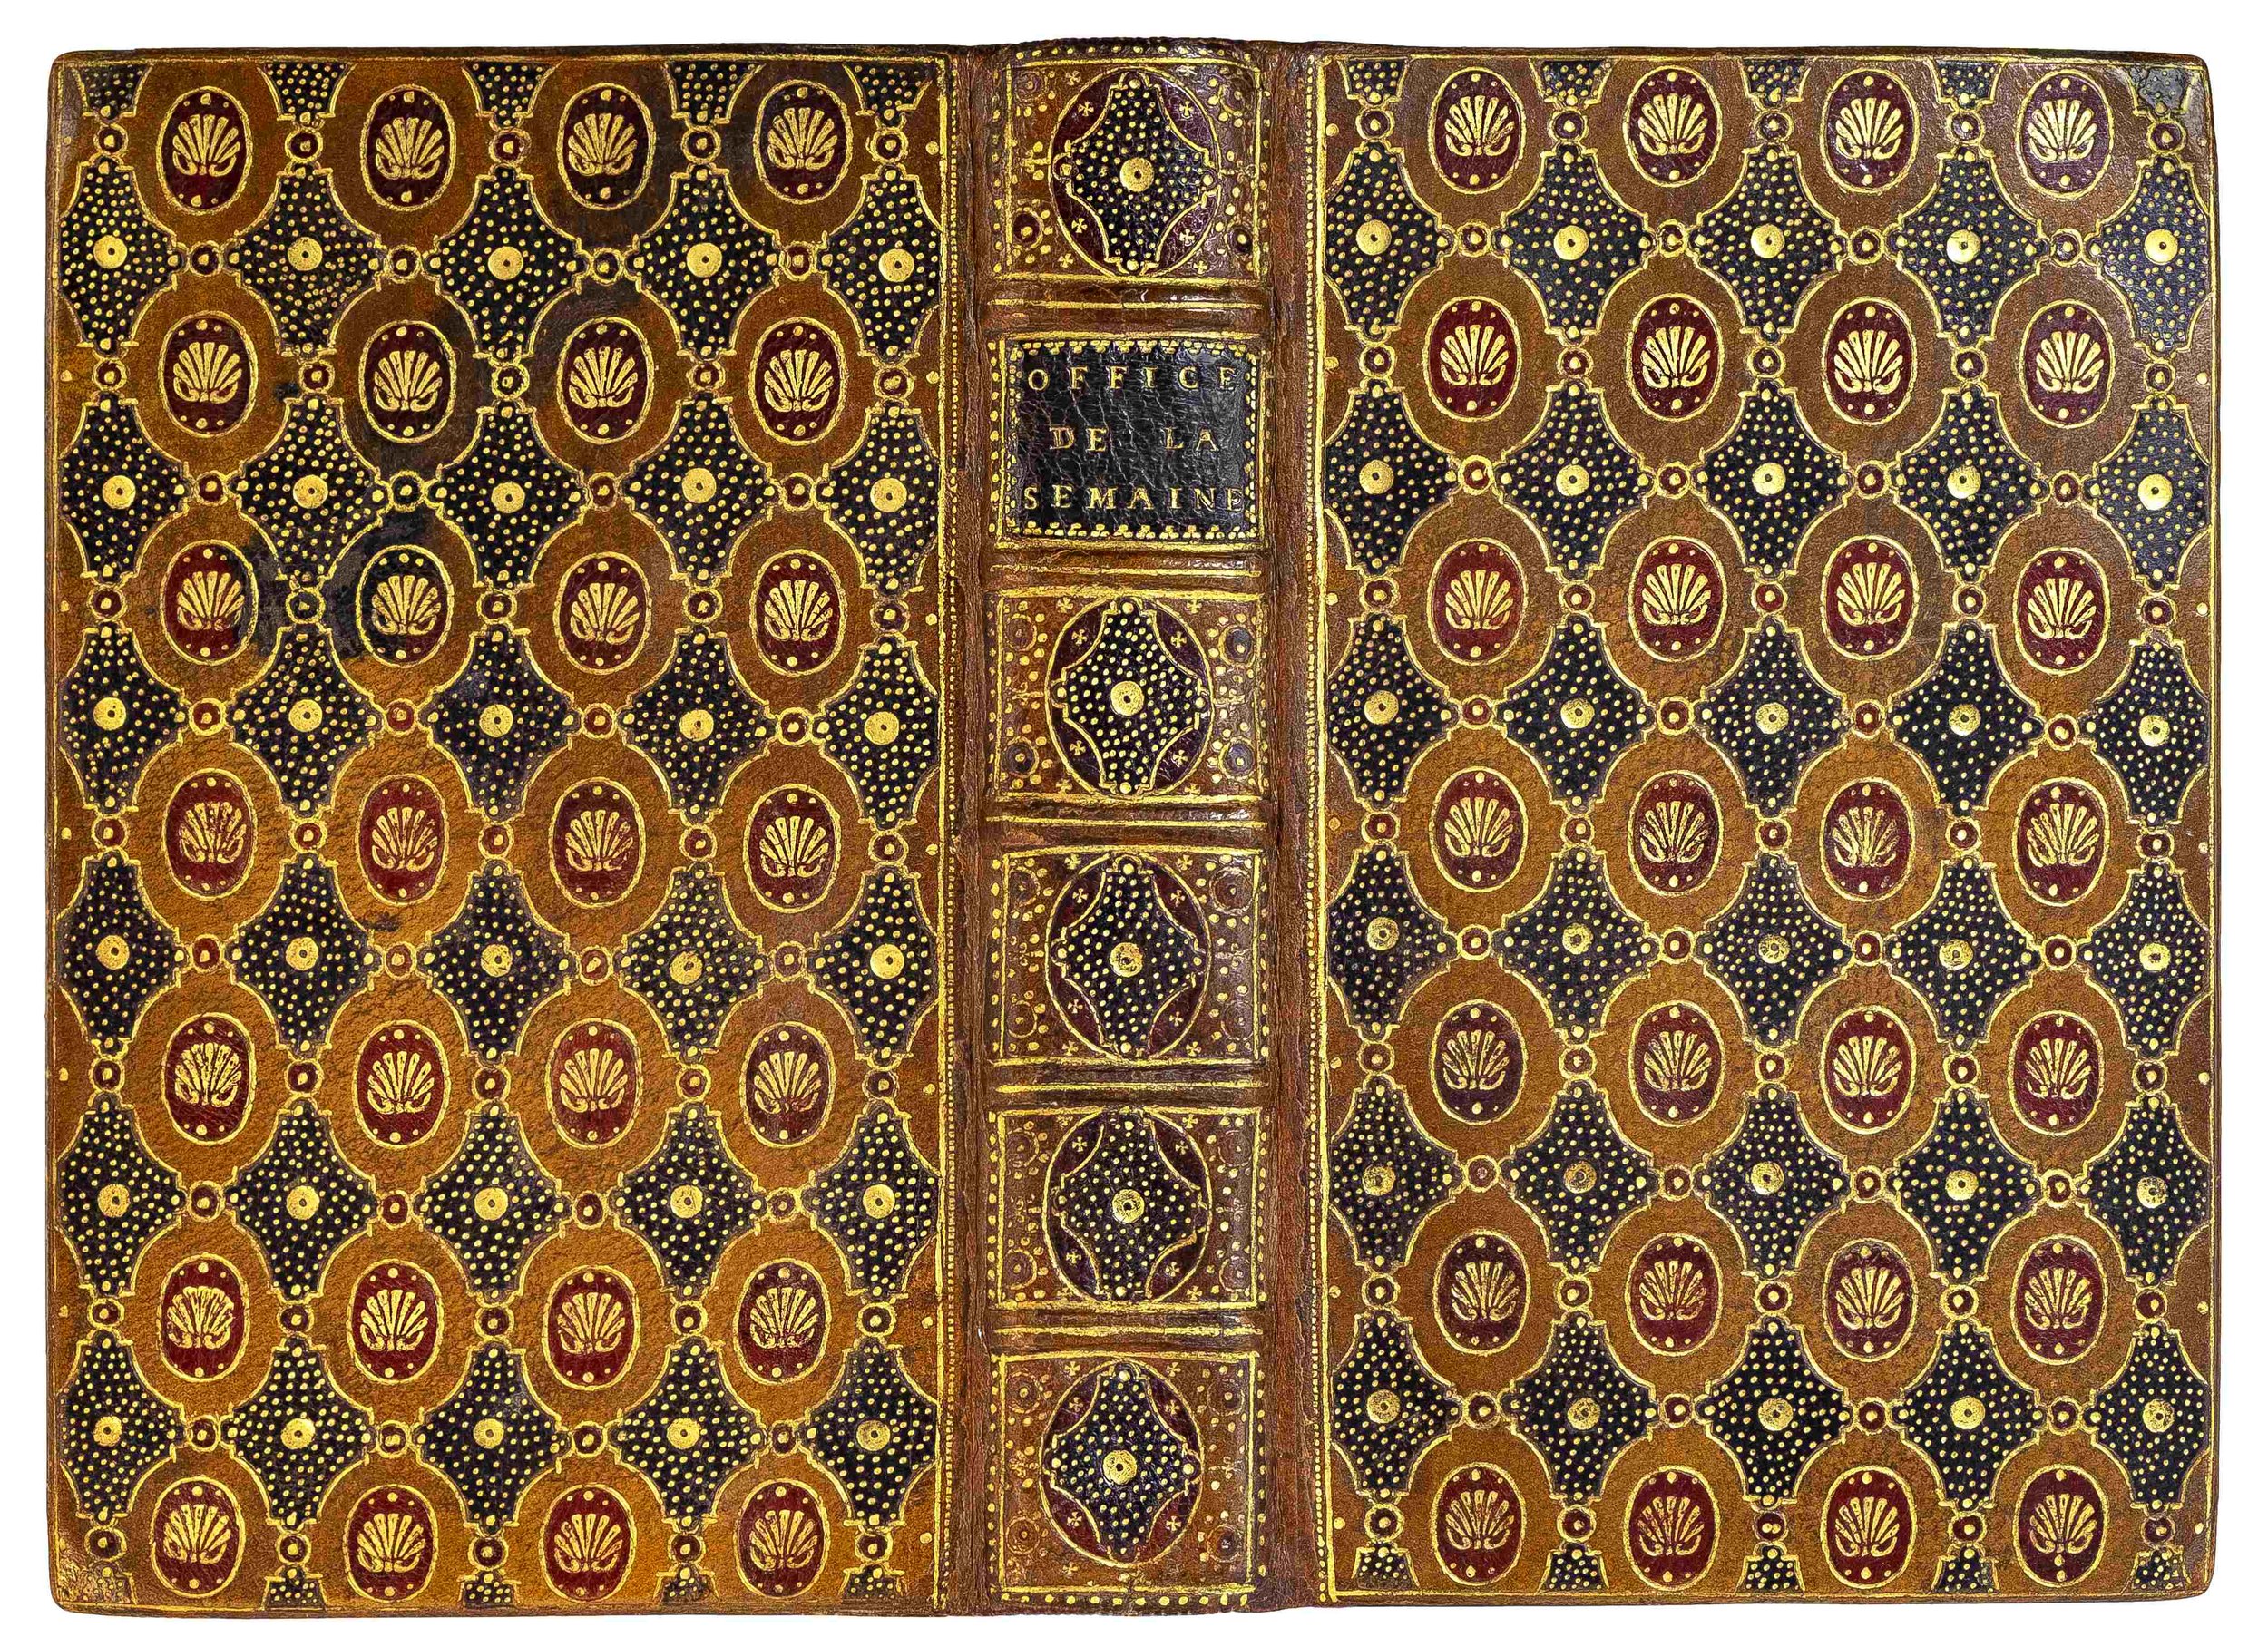 037-padeloup-repetition-Inlaid-Binding-morocco-mosaic-reliure-maroquin-18th-century.jpg